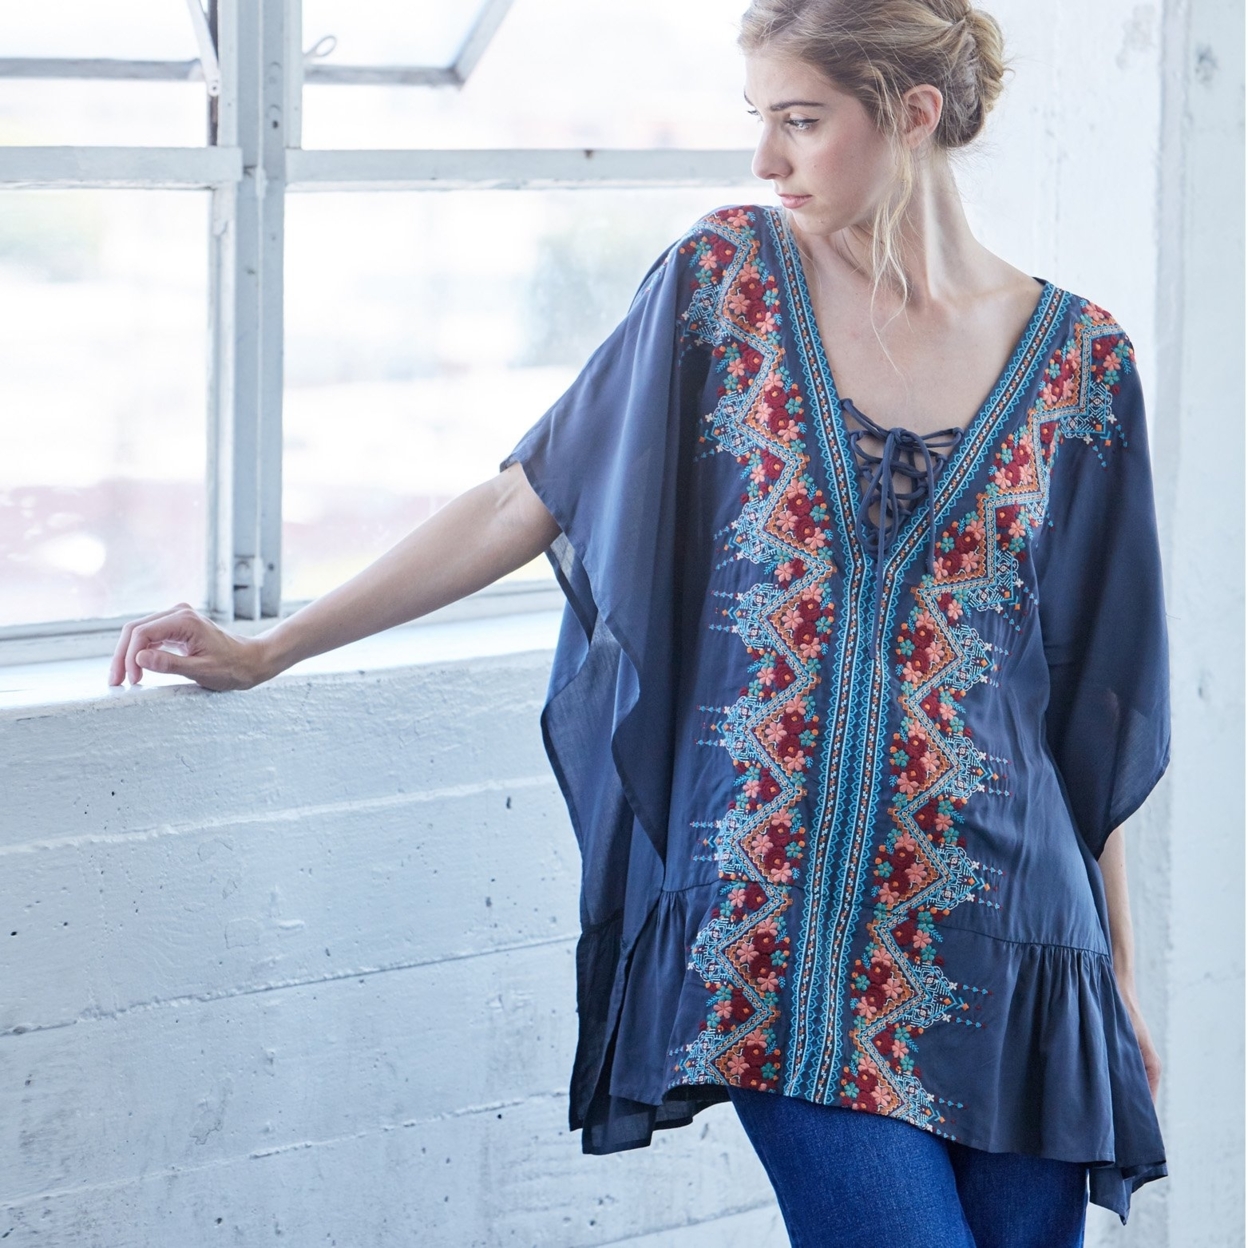 Florid Embroidery Kimono Top - Blue, Large (12-14)